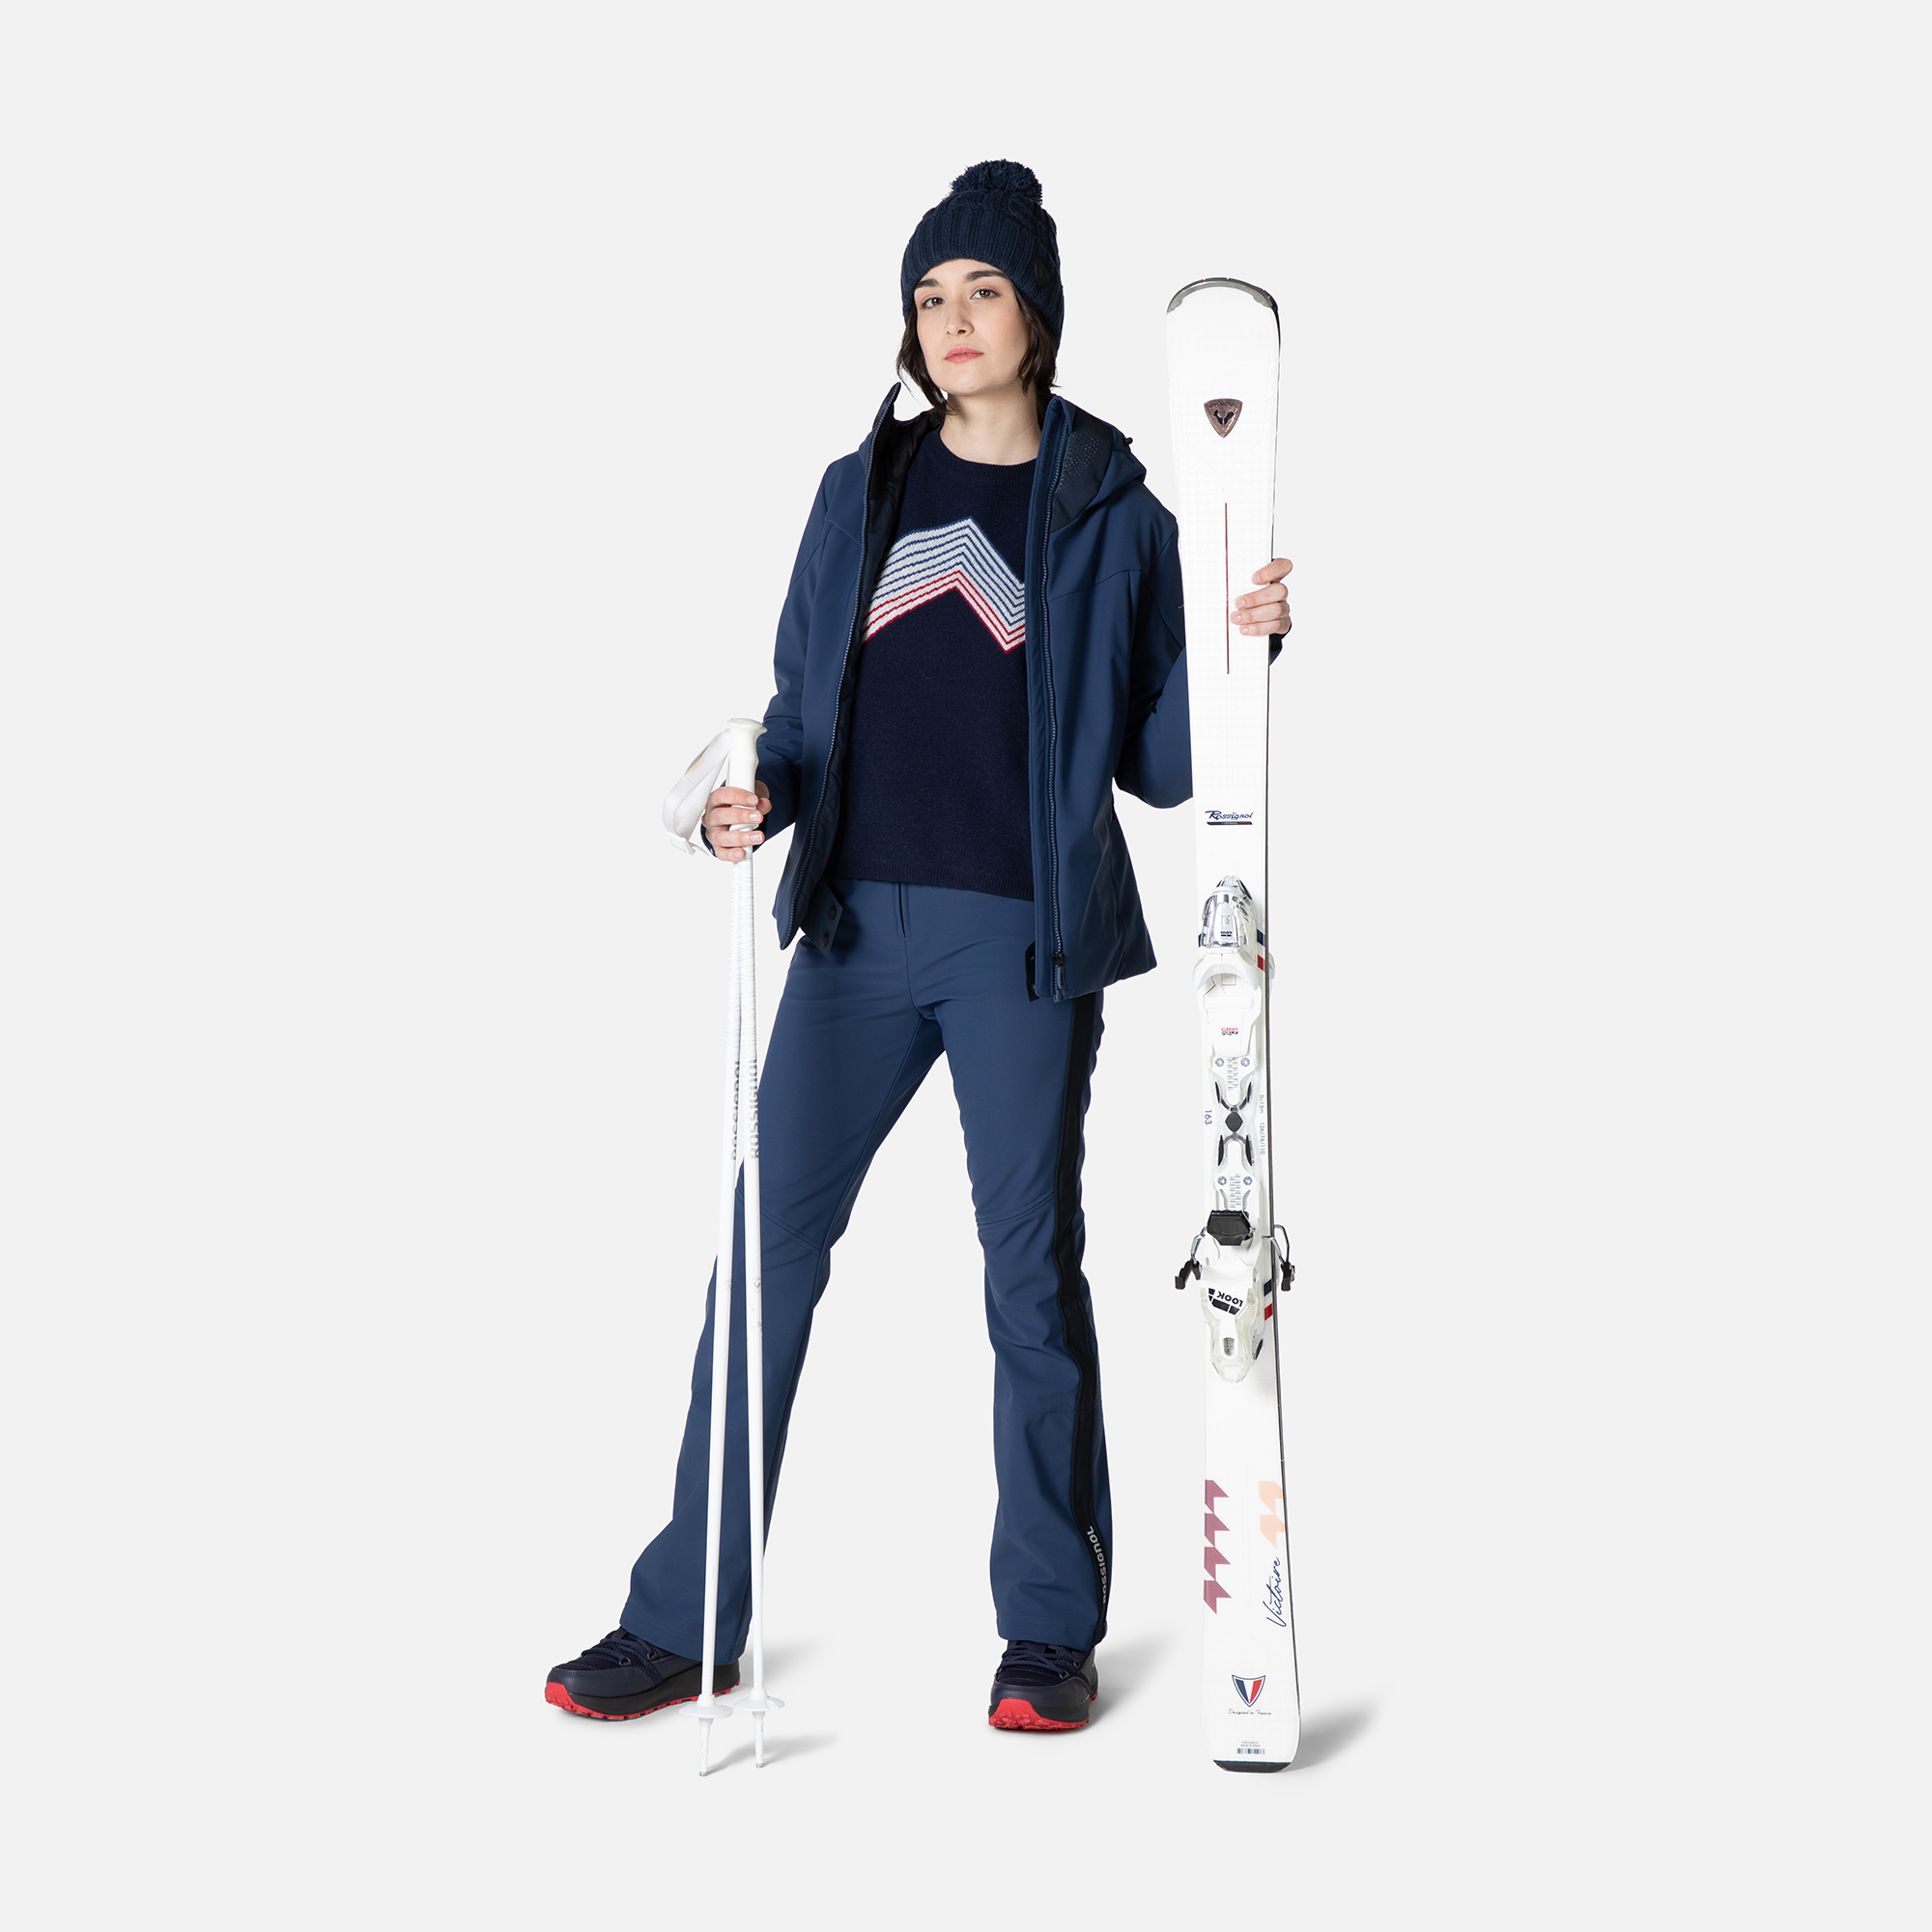 Veste de ski Versatile femme